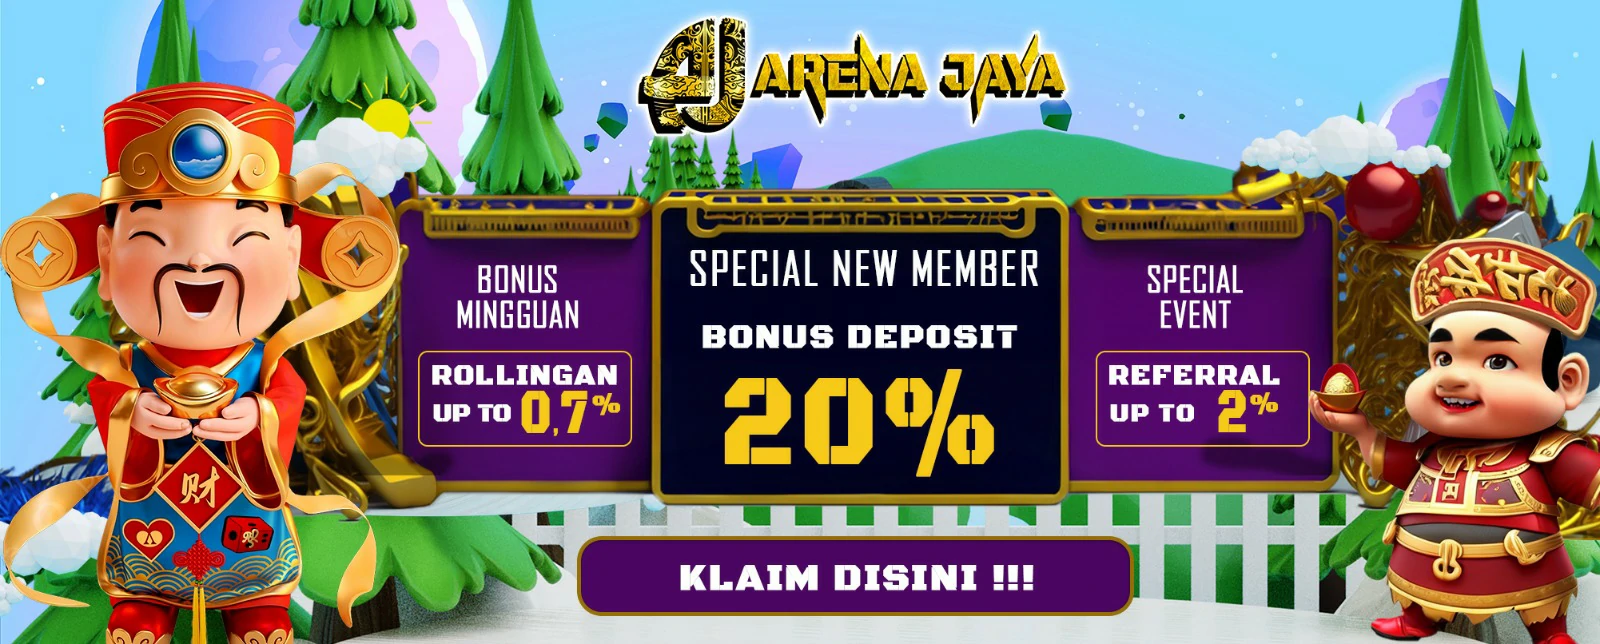 Situs Slot Arena Jaya